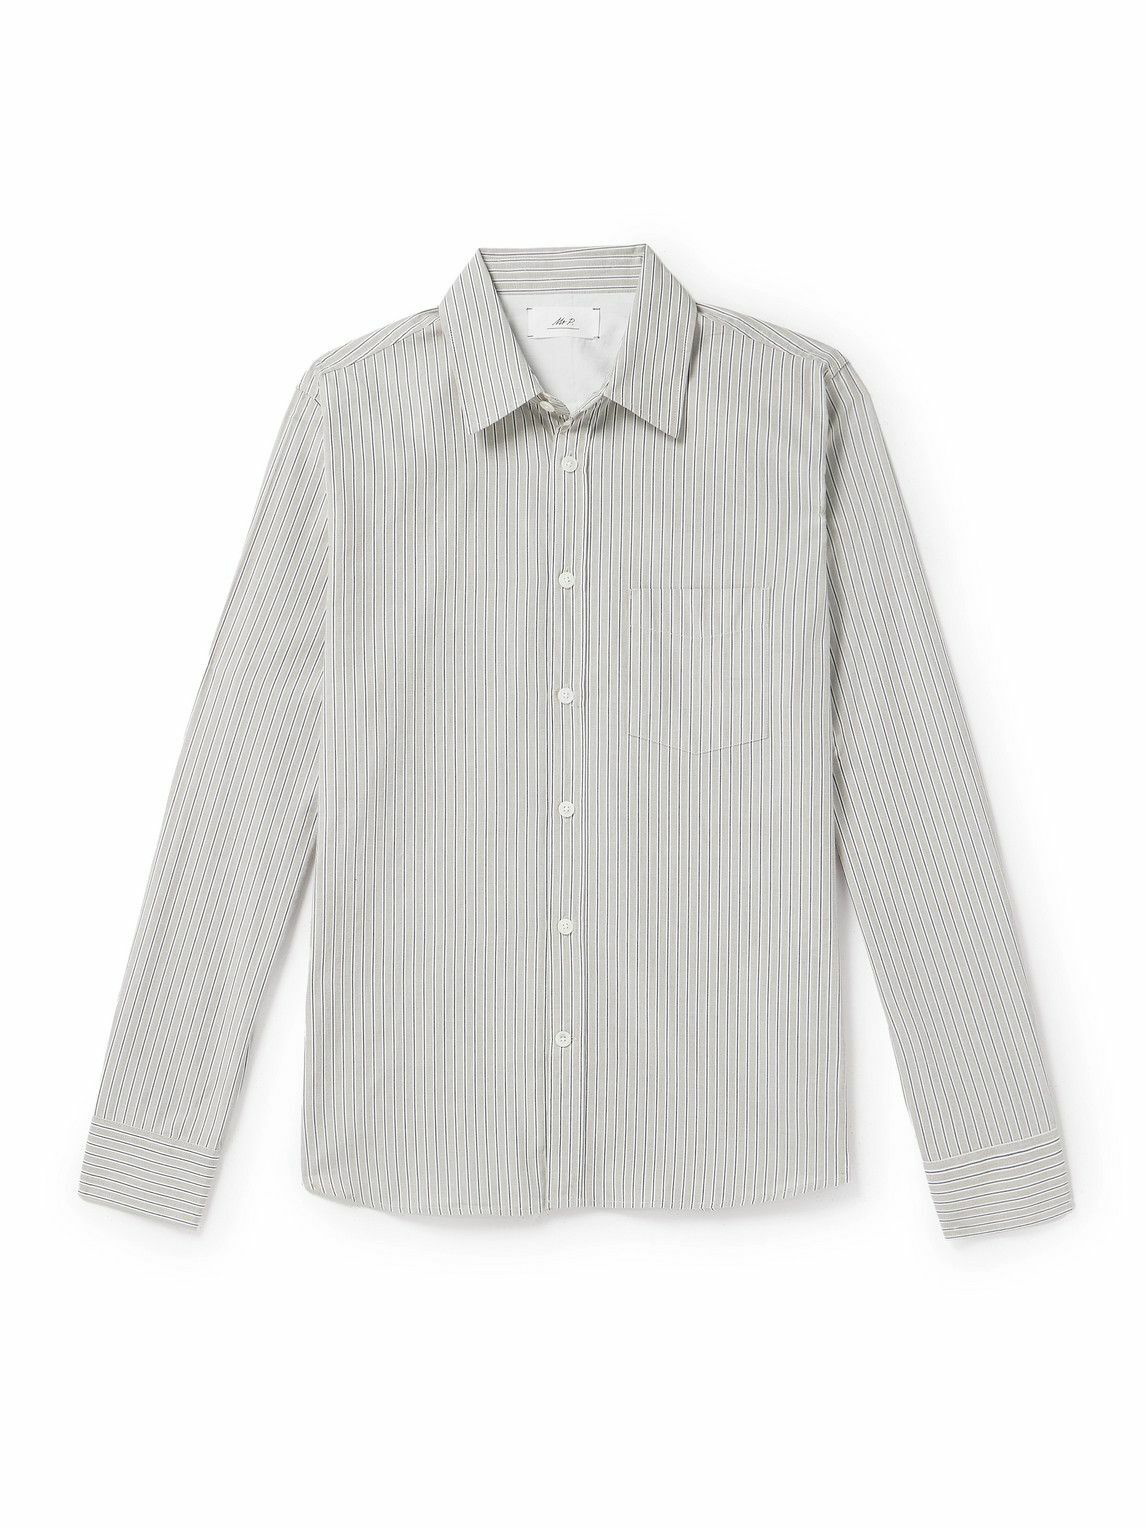 Mr P. - Pinstriped Cotton Oxford Shirt - Gray Mr P.